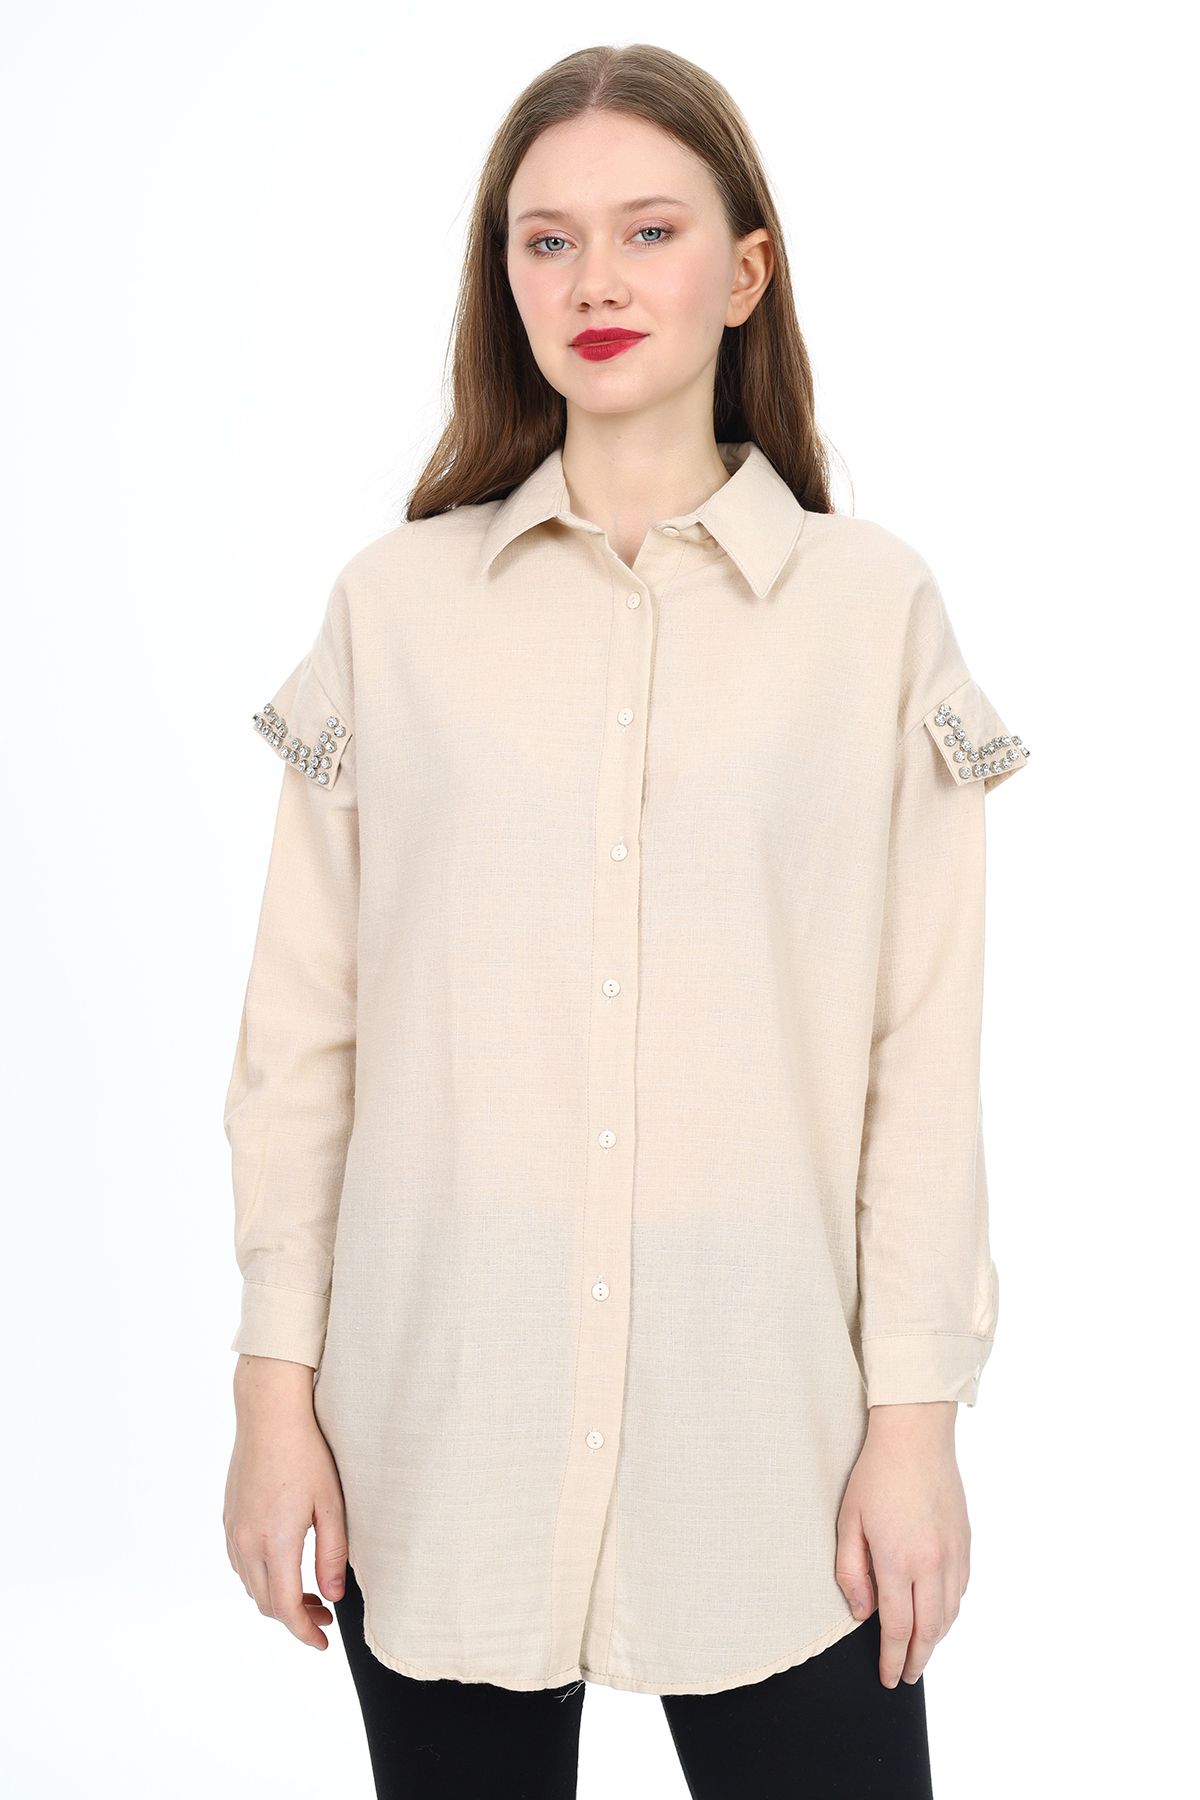 Enisena Kadın Gömlek-Omuz Taş Süsleme Detaylı S-M-L-XL 0199Zyk